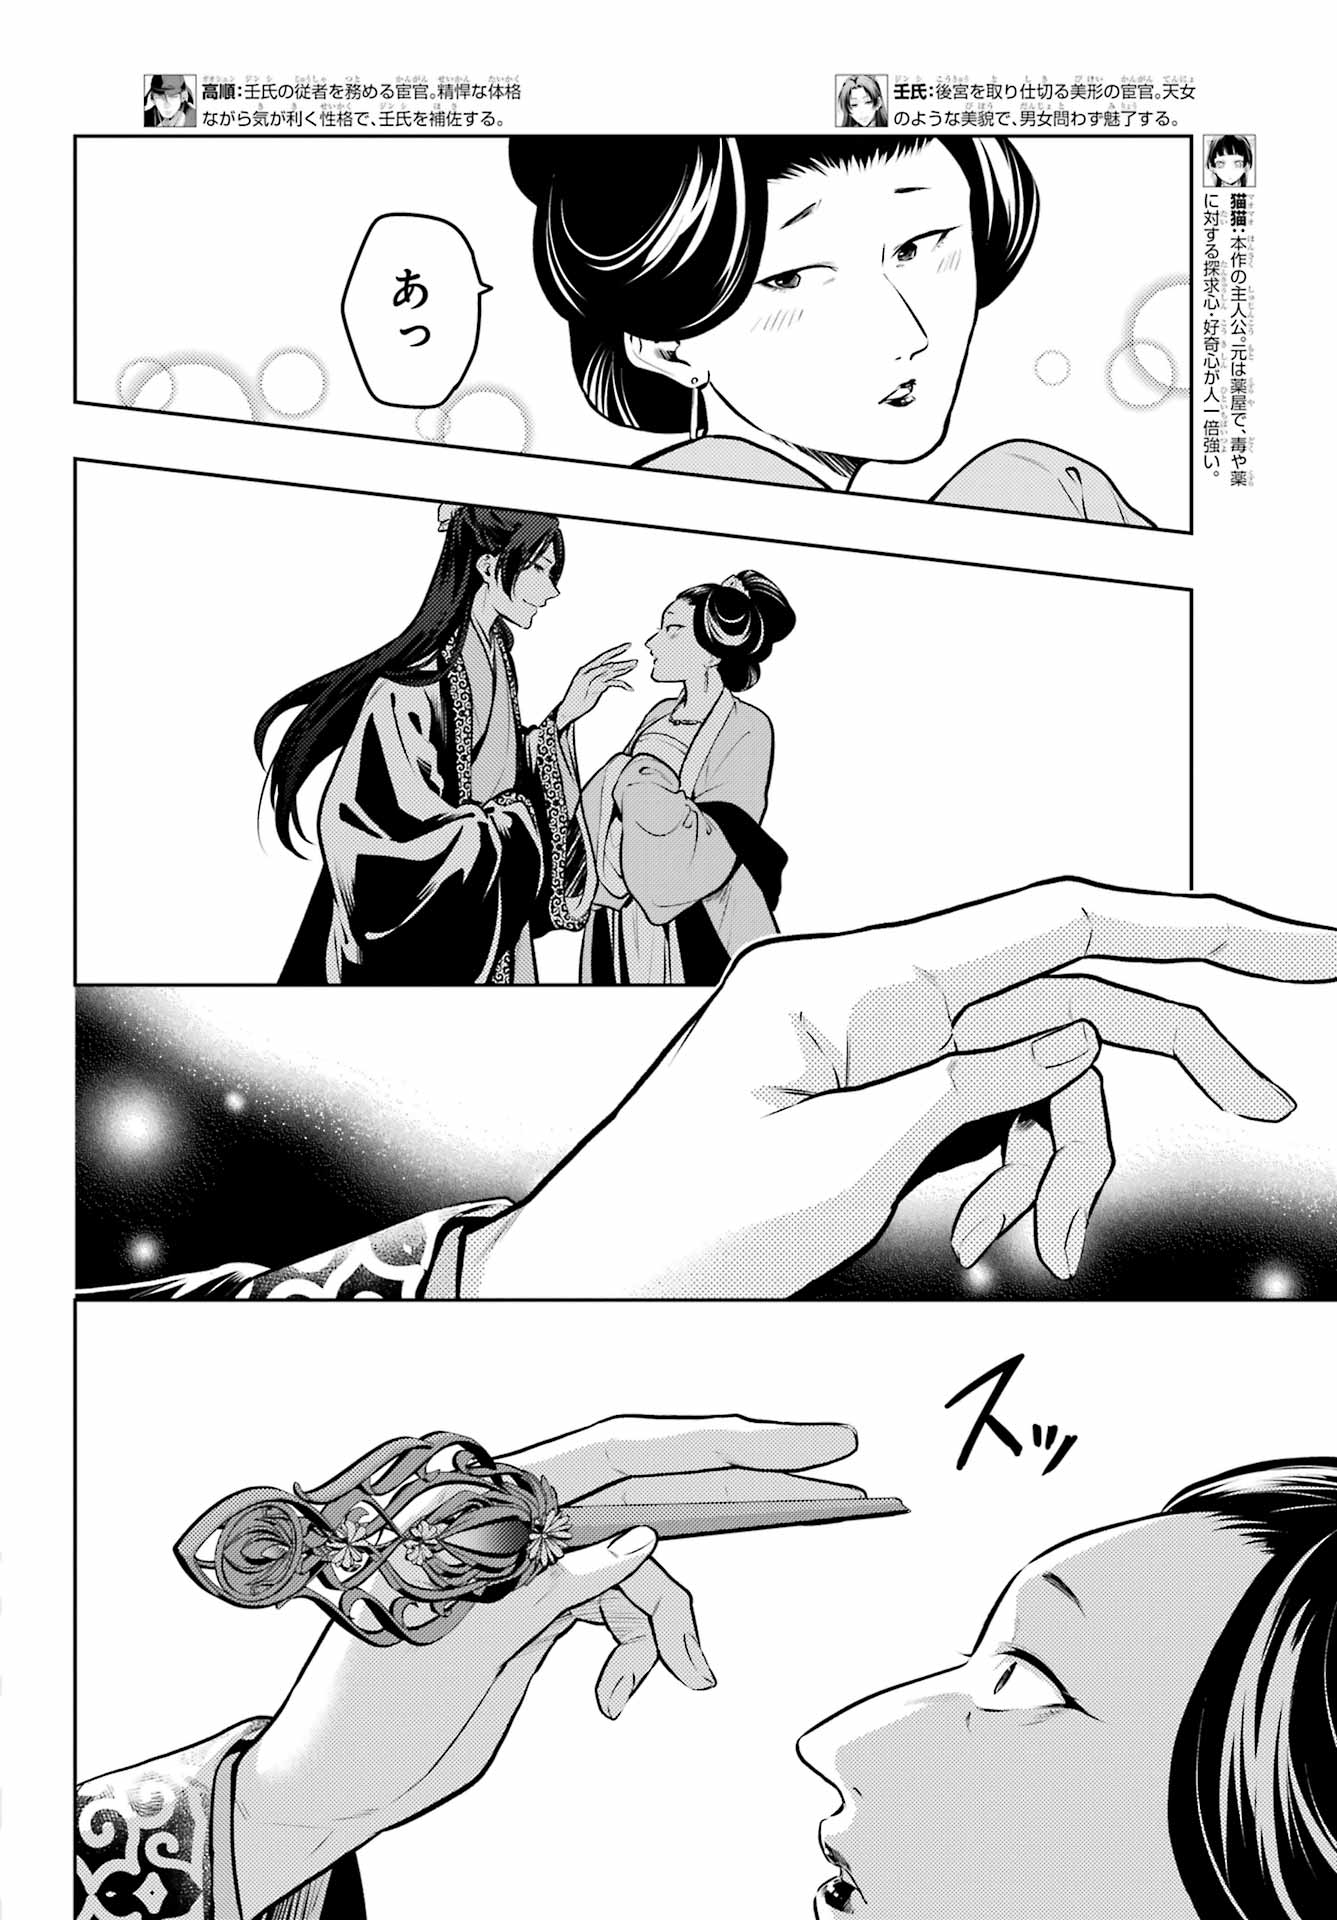 Kusuriya no Hitorigoto - Chapter 68 - Page 2